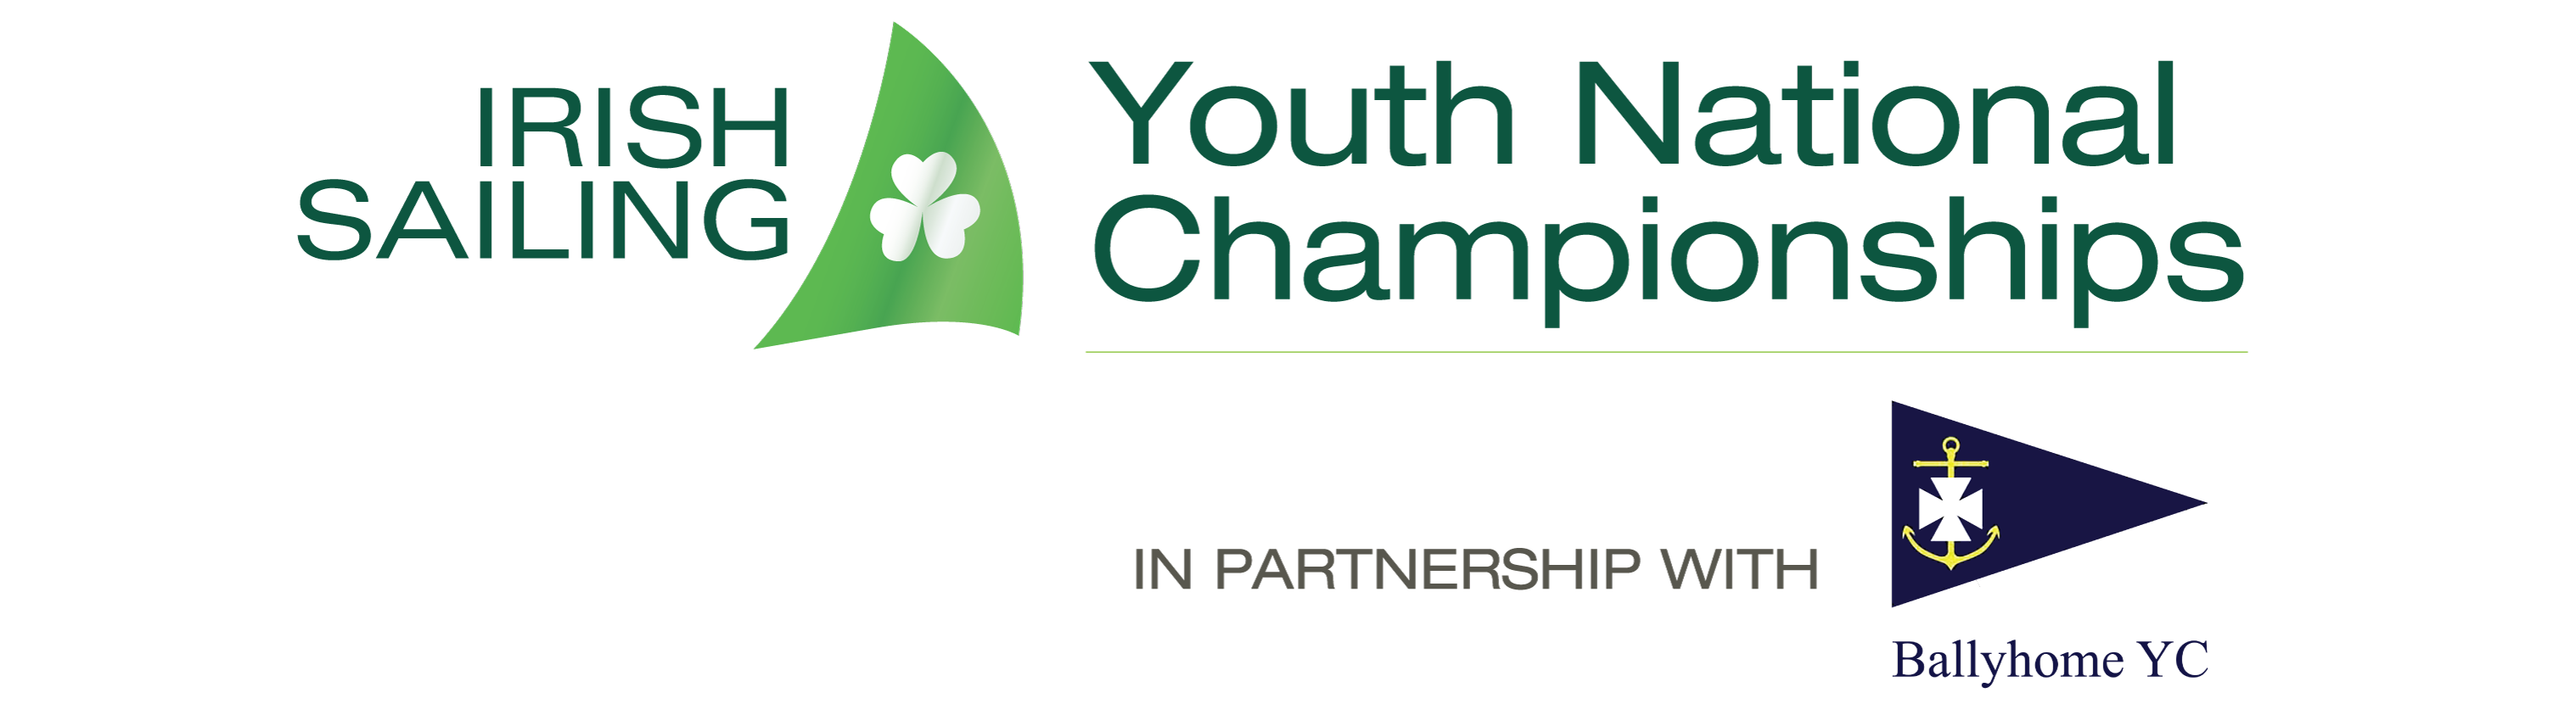 Youth National Championships 2022 Ballyholme